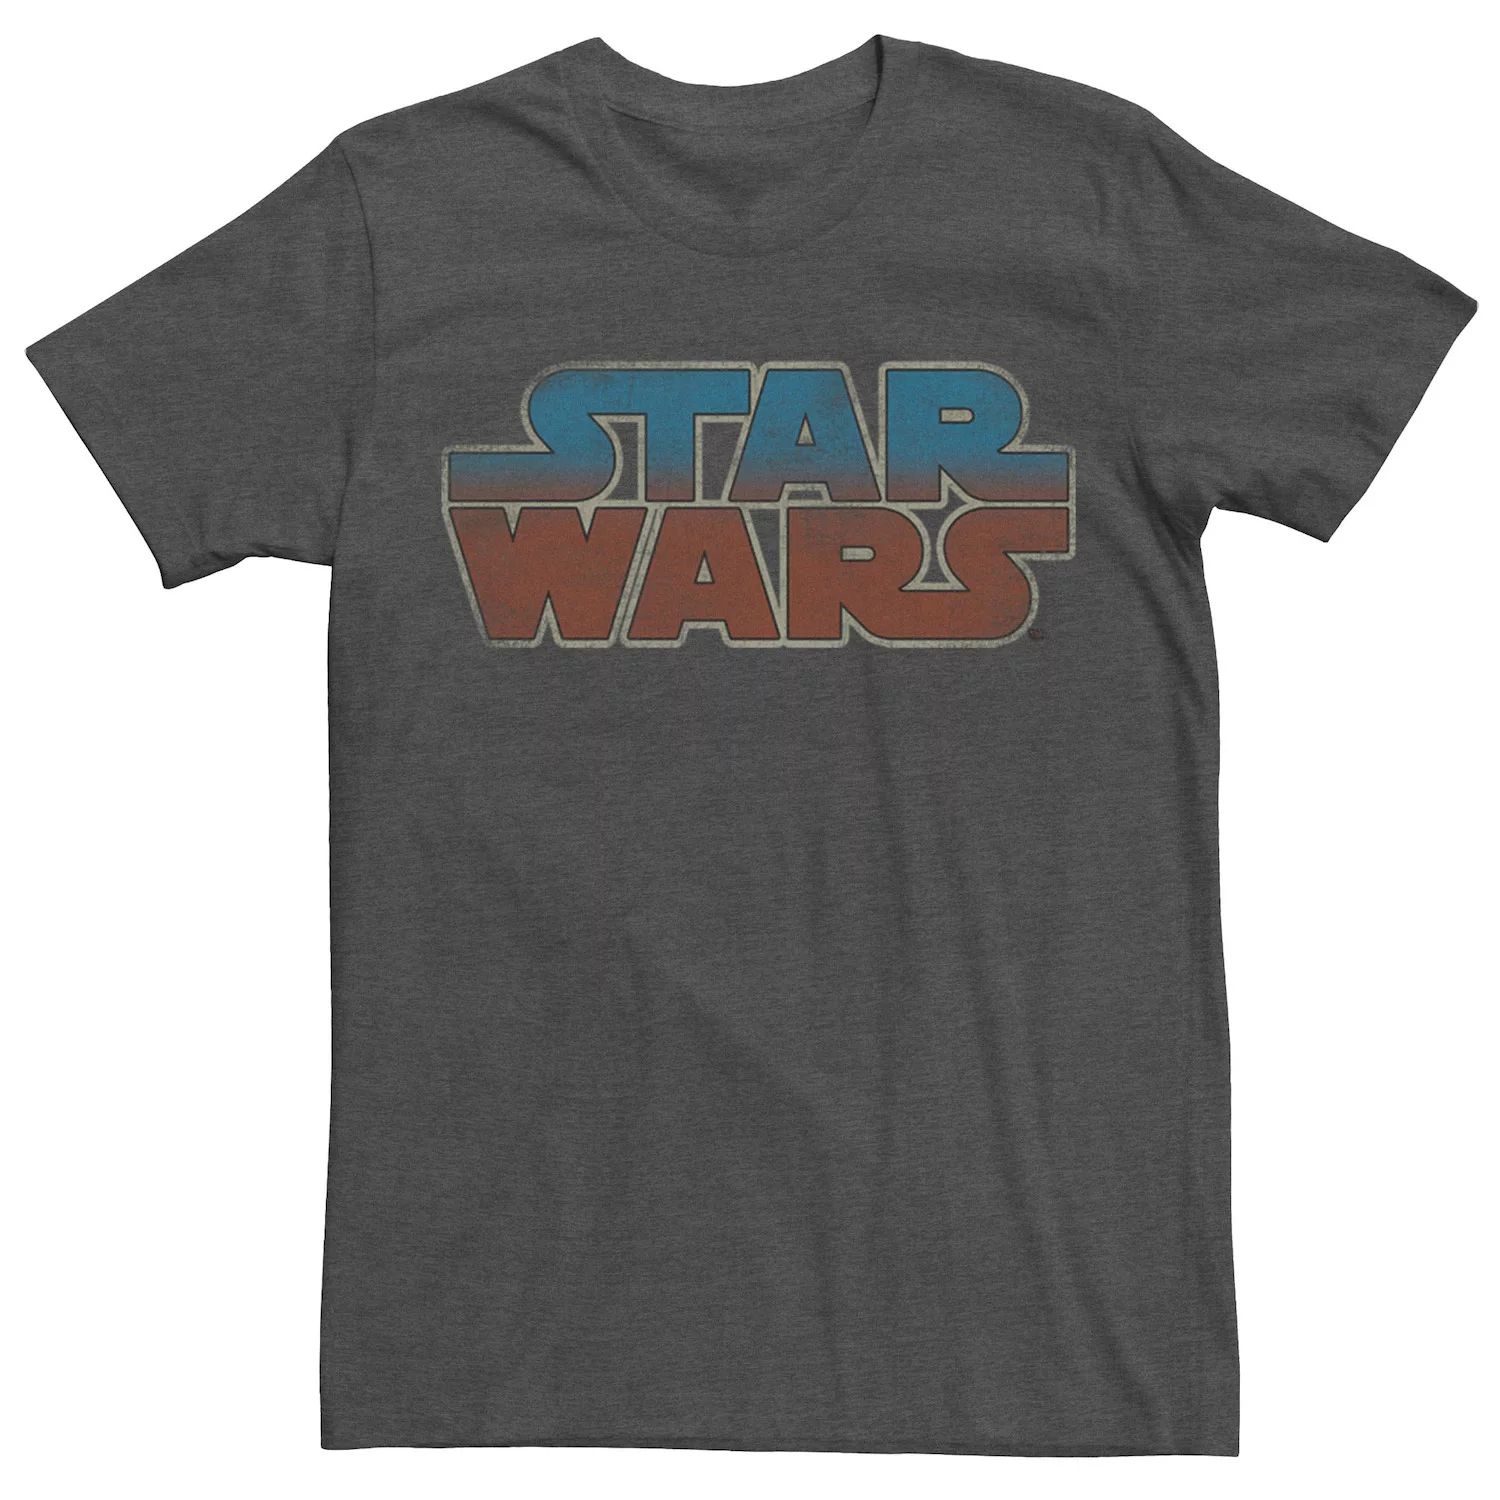 Мужская футболка с логотипом Star Wars